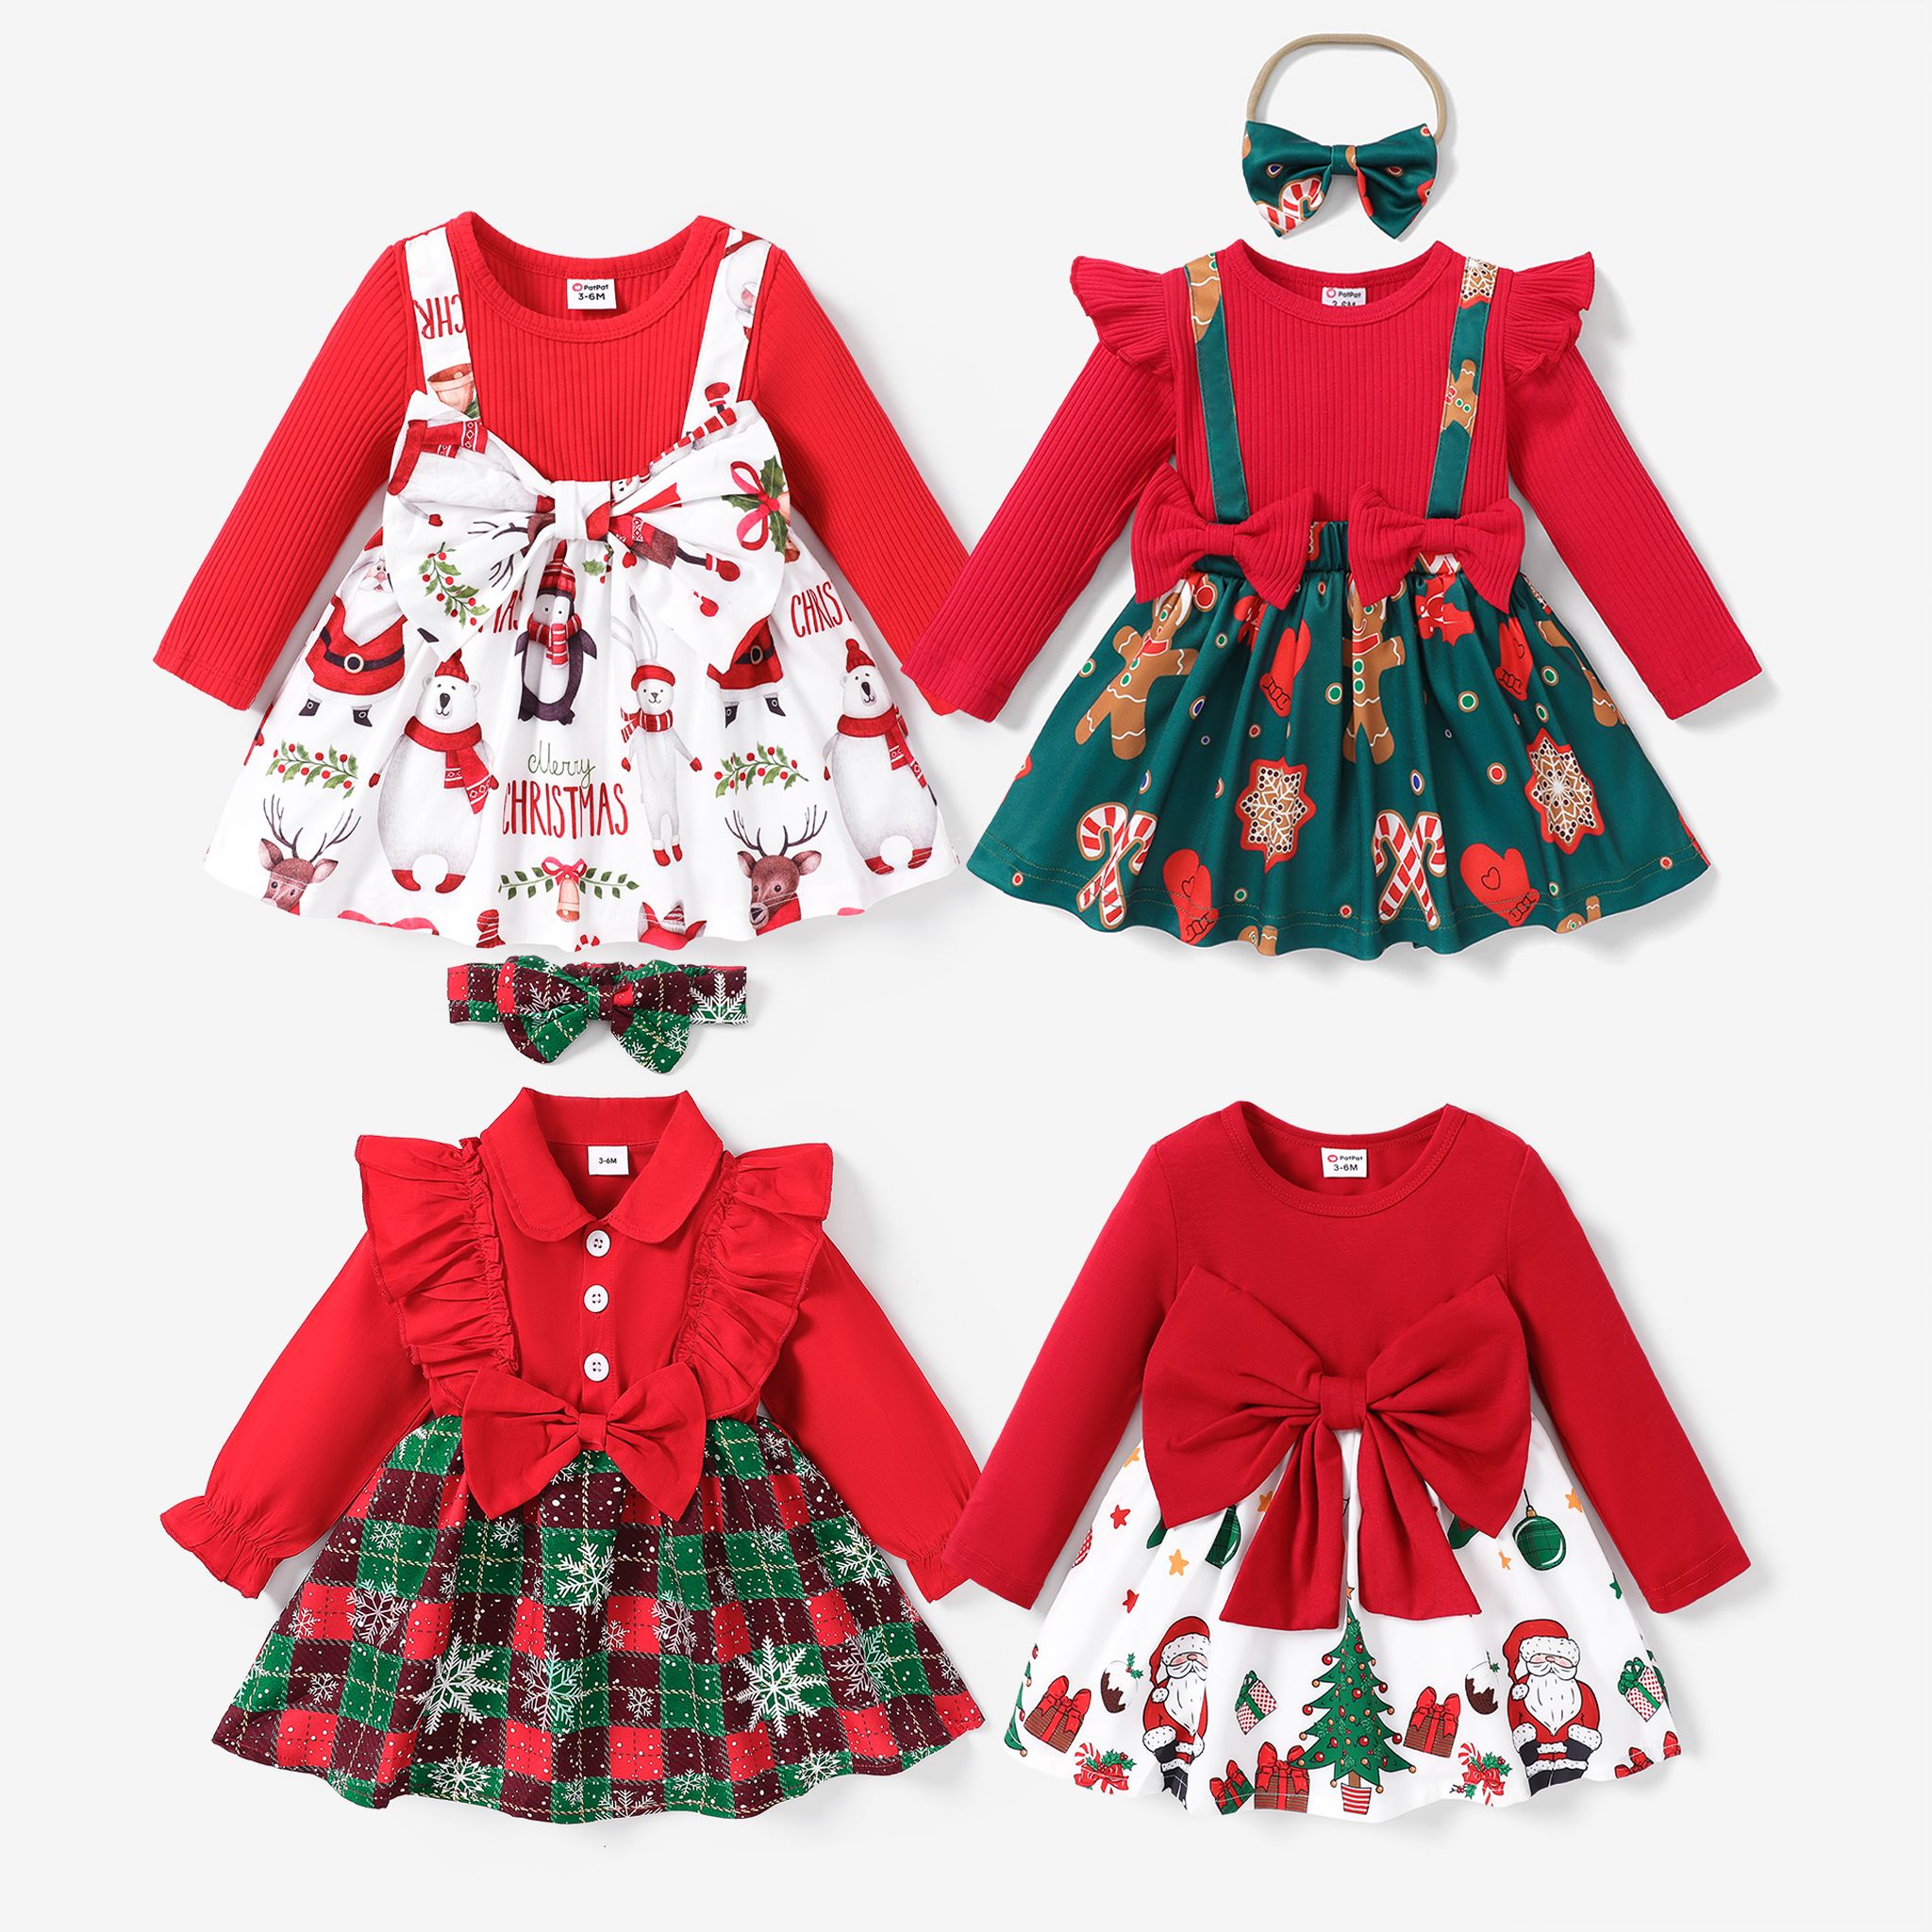 Beautiful Christmas Dress Design Ideas For Girls & Women/Christmas Party Dress  Design Ideas - YouTube